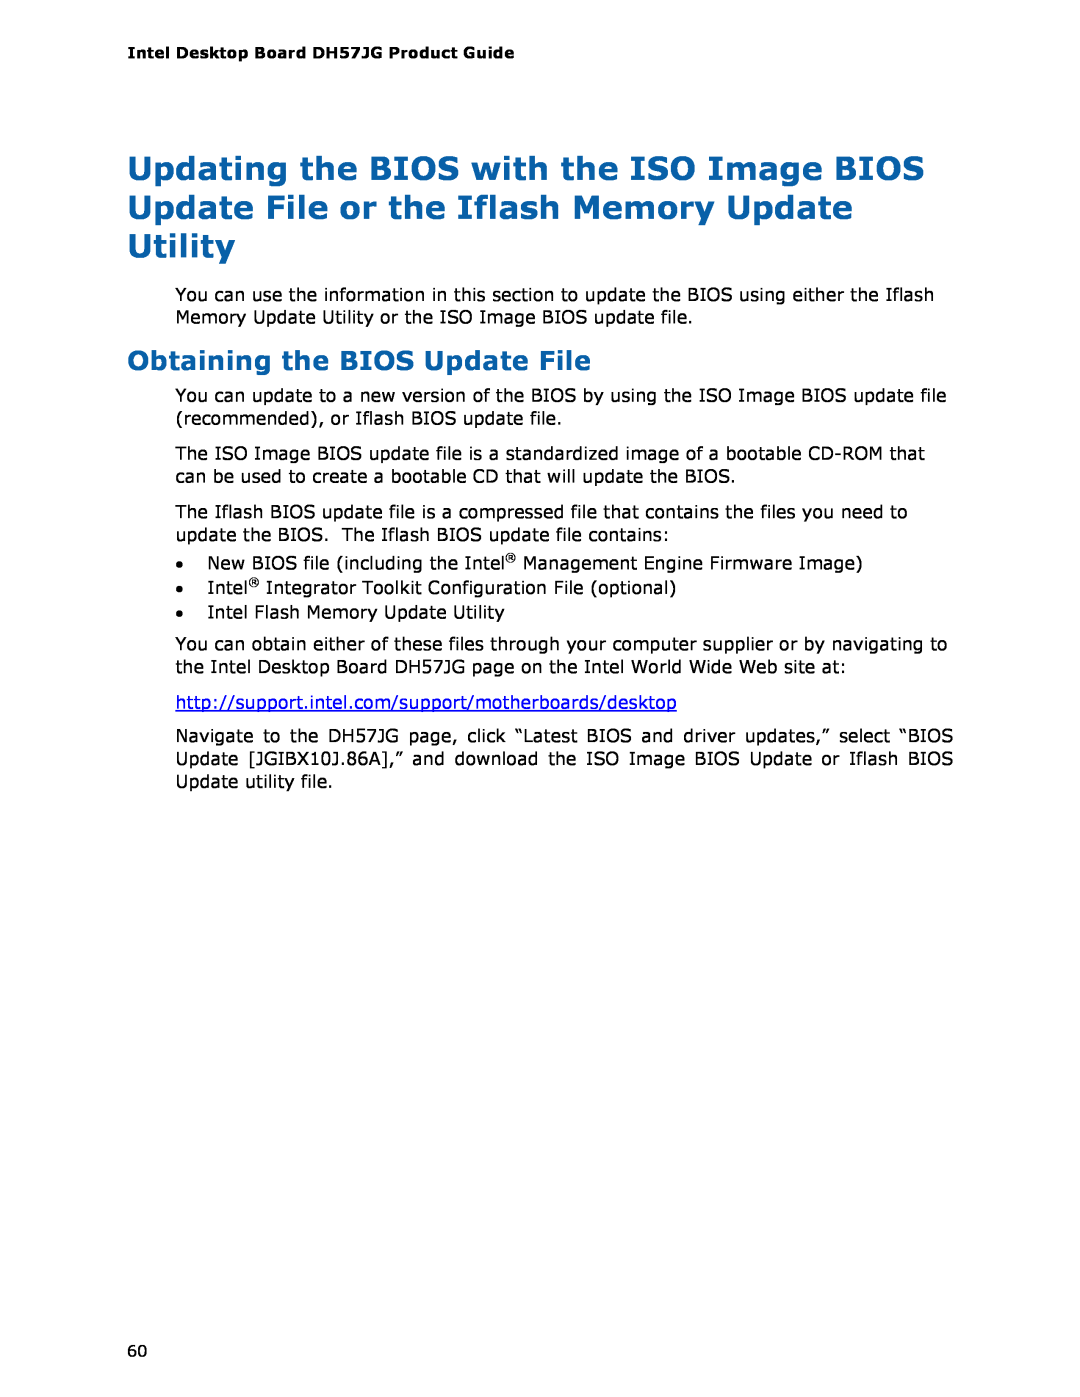 Intel BLKDH57JG manual Obtaining the BIOS Update File, http//support.intel.com/support/motherboards/desktop 